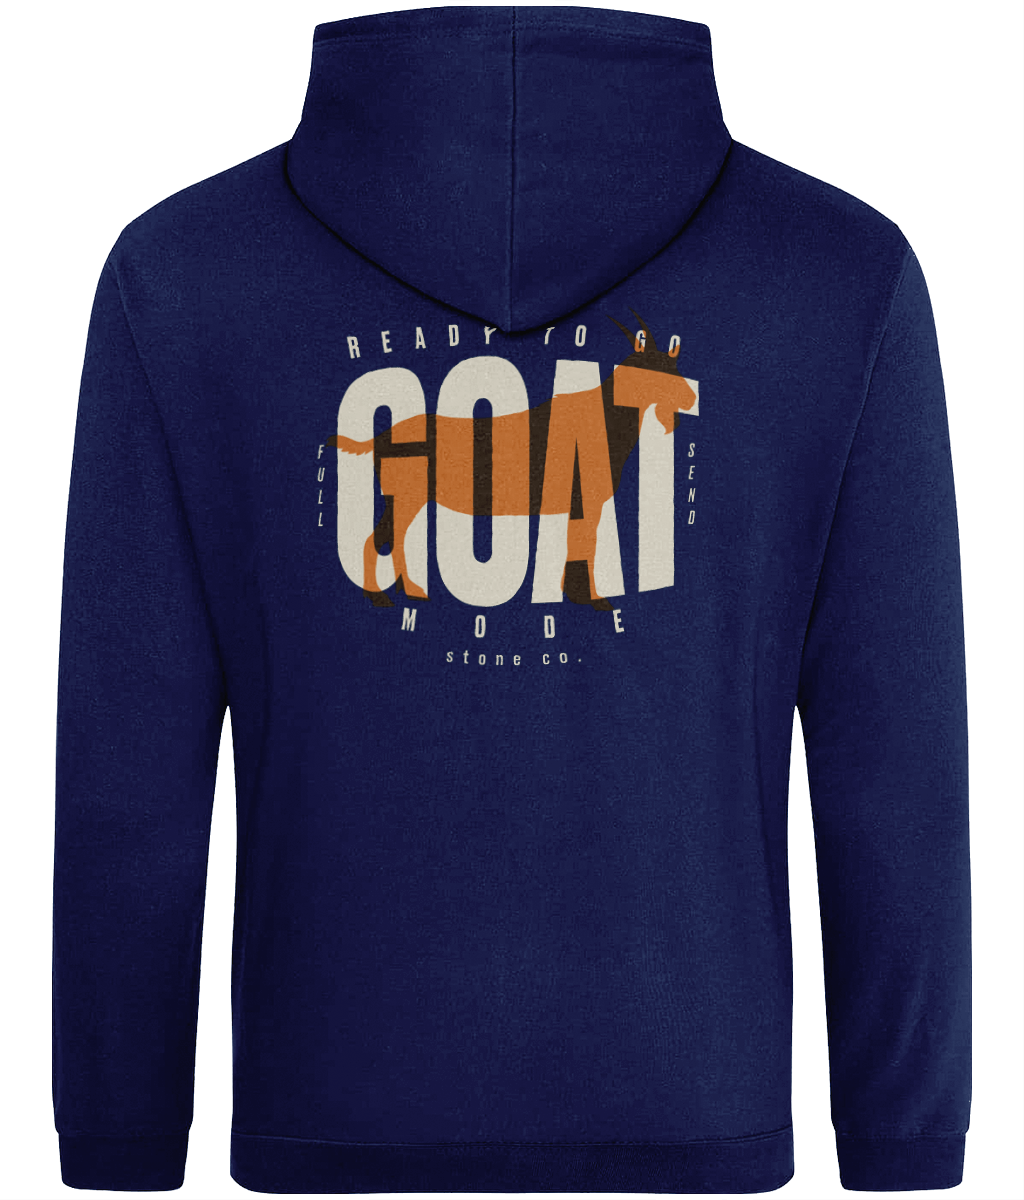 Goat mode hoodie